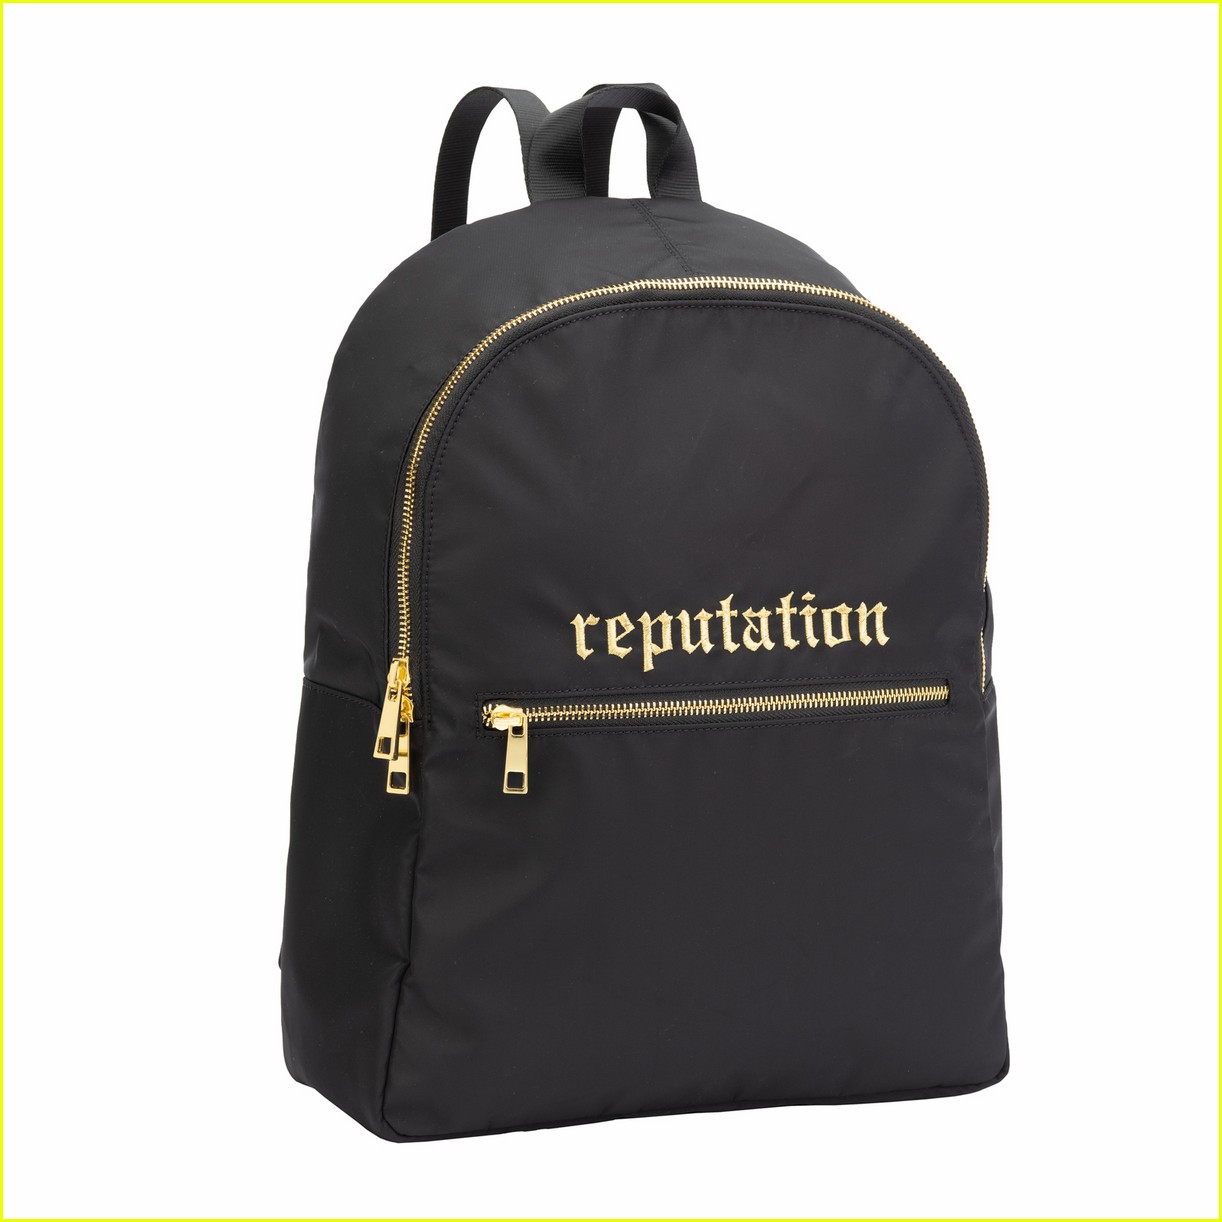 taylor swift reputation tour merchandise 01